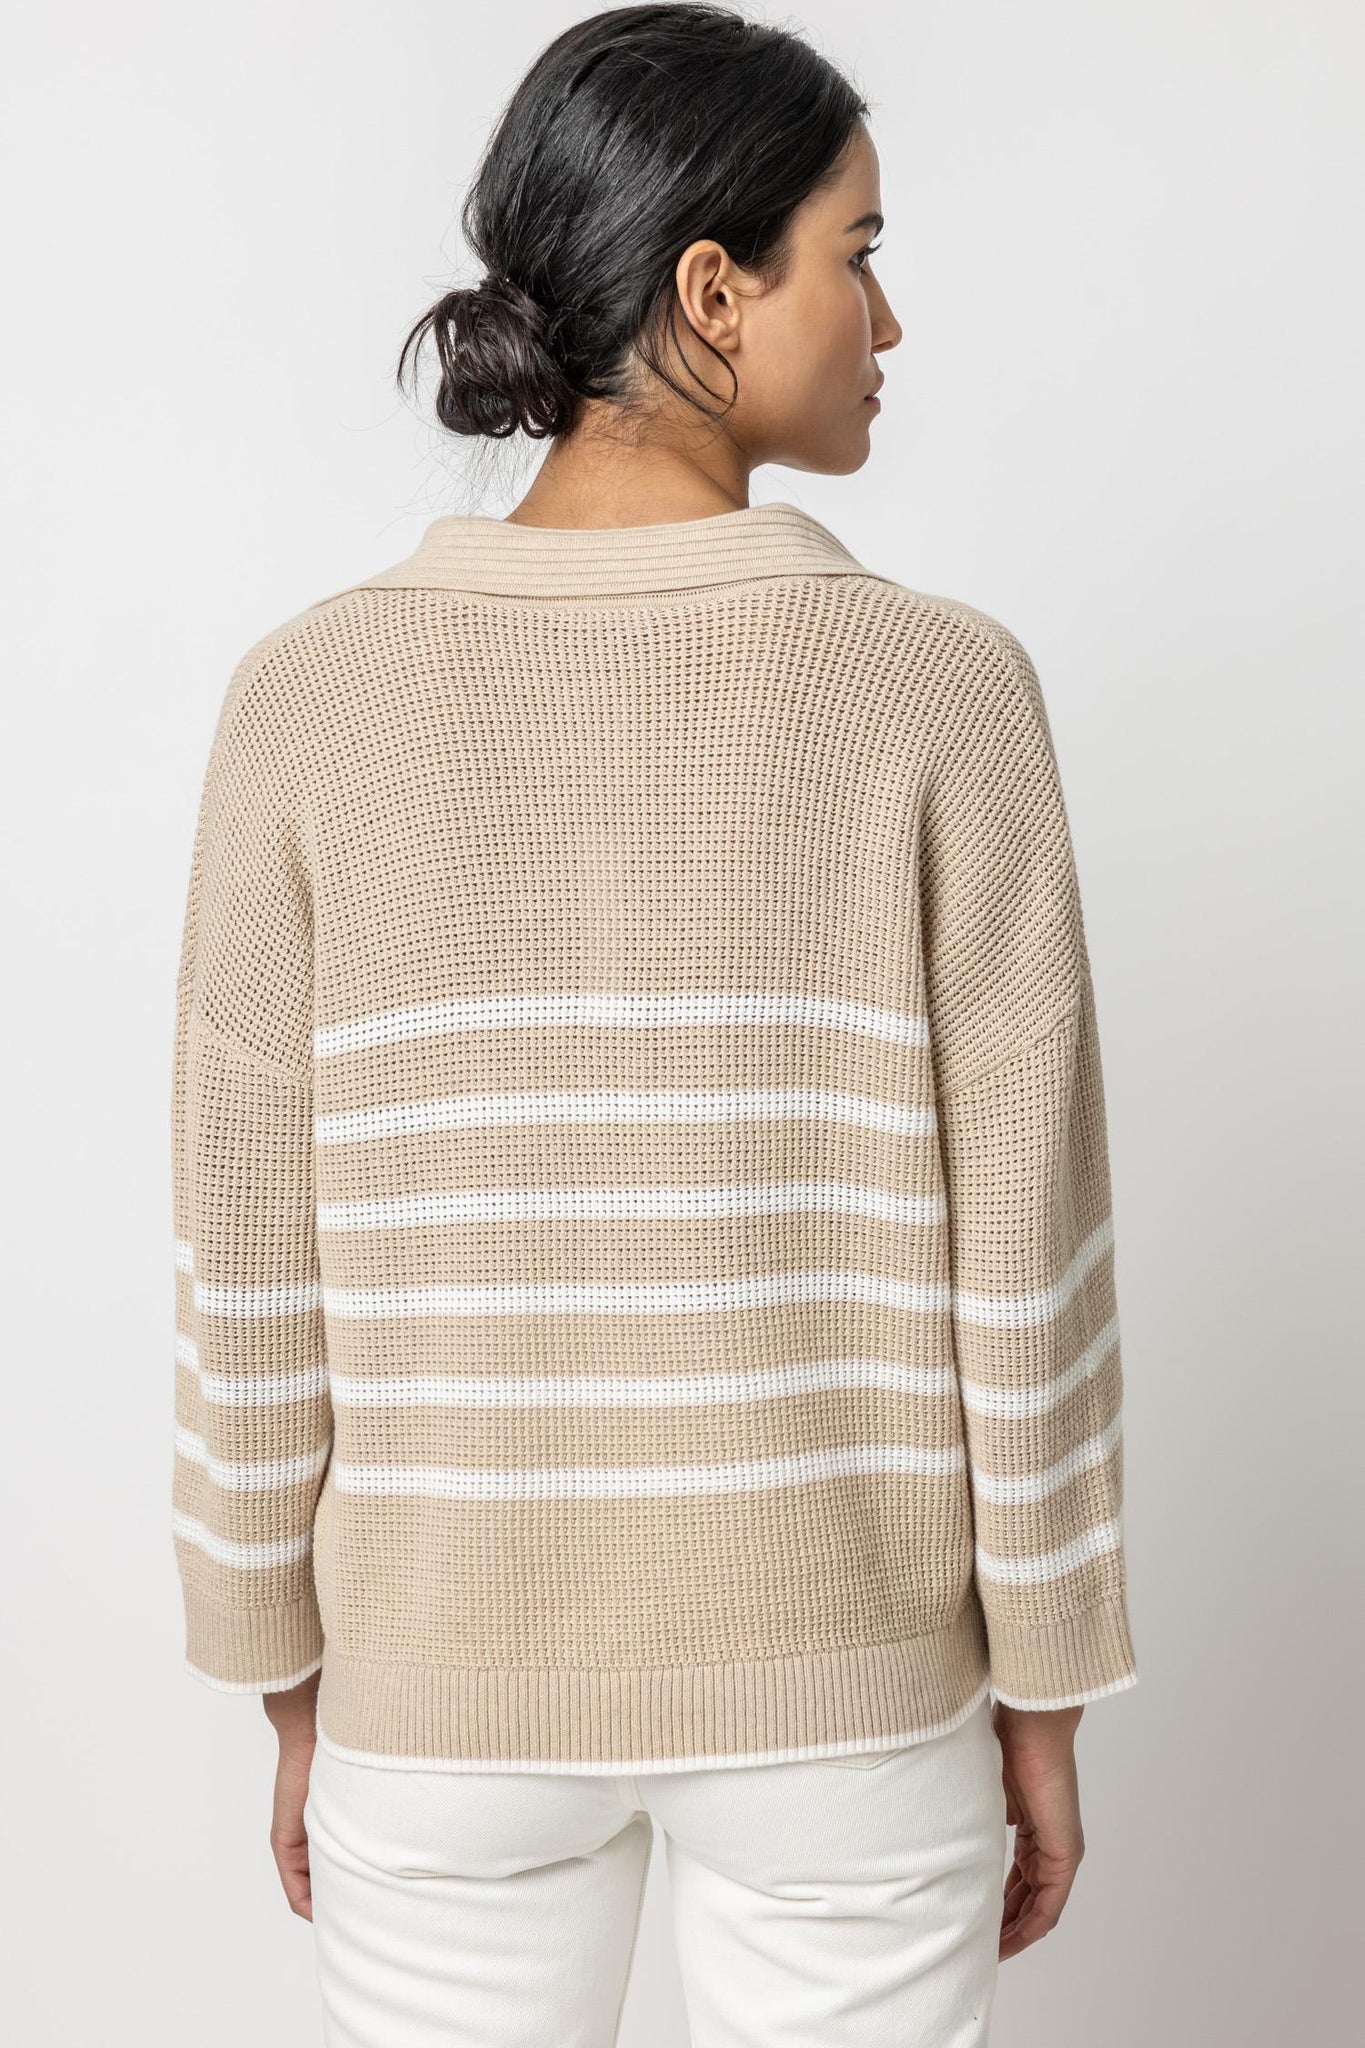 Lilla P Textured Strip Polo Sweater - Husk/White